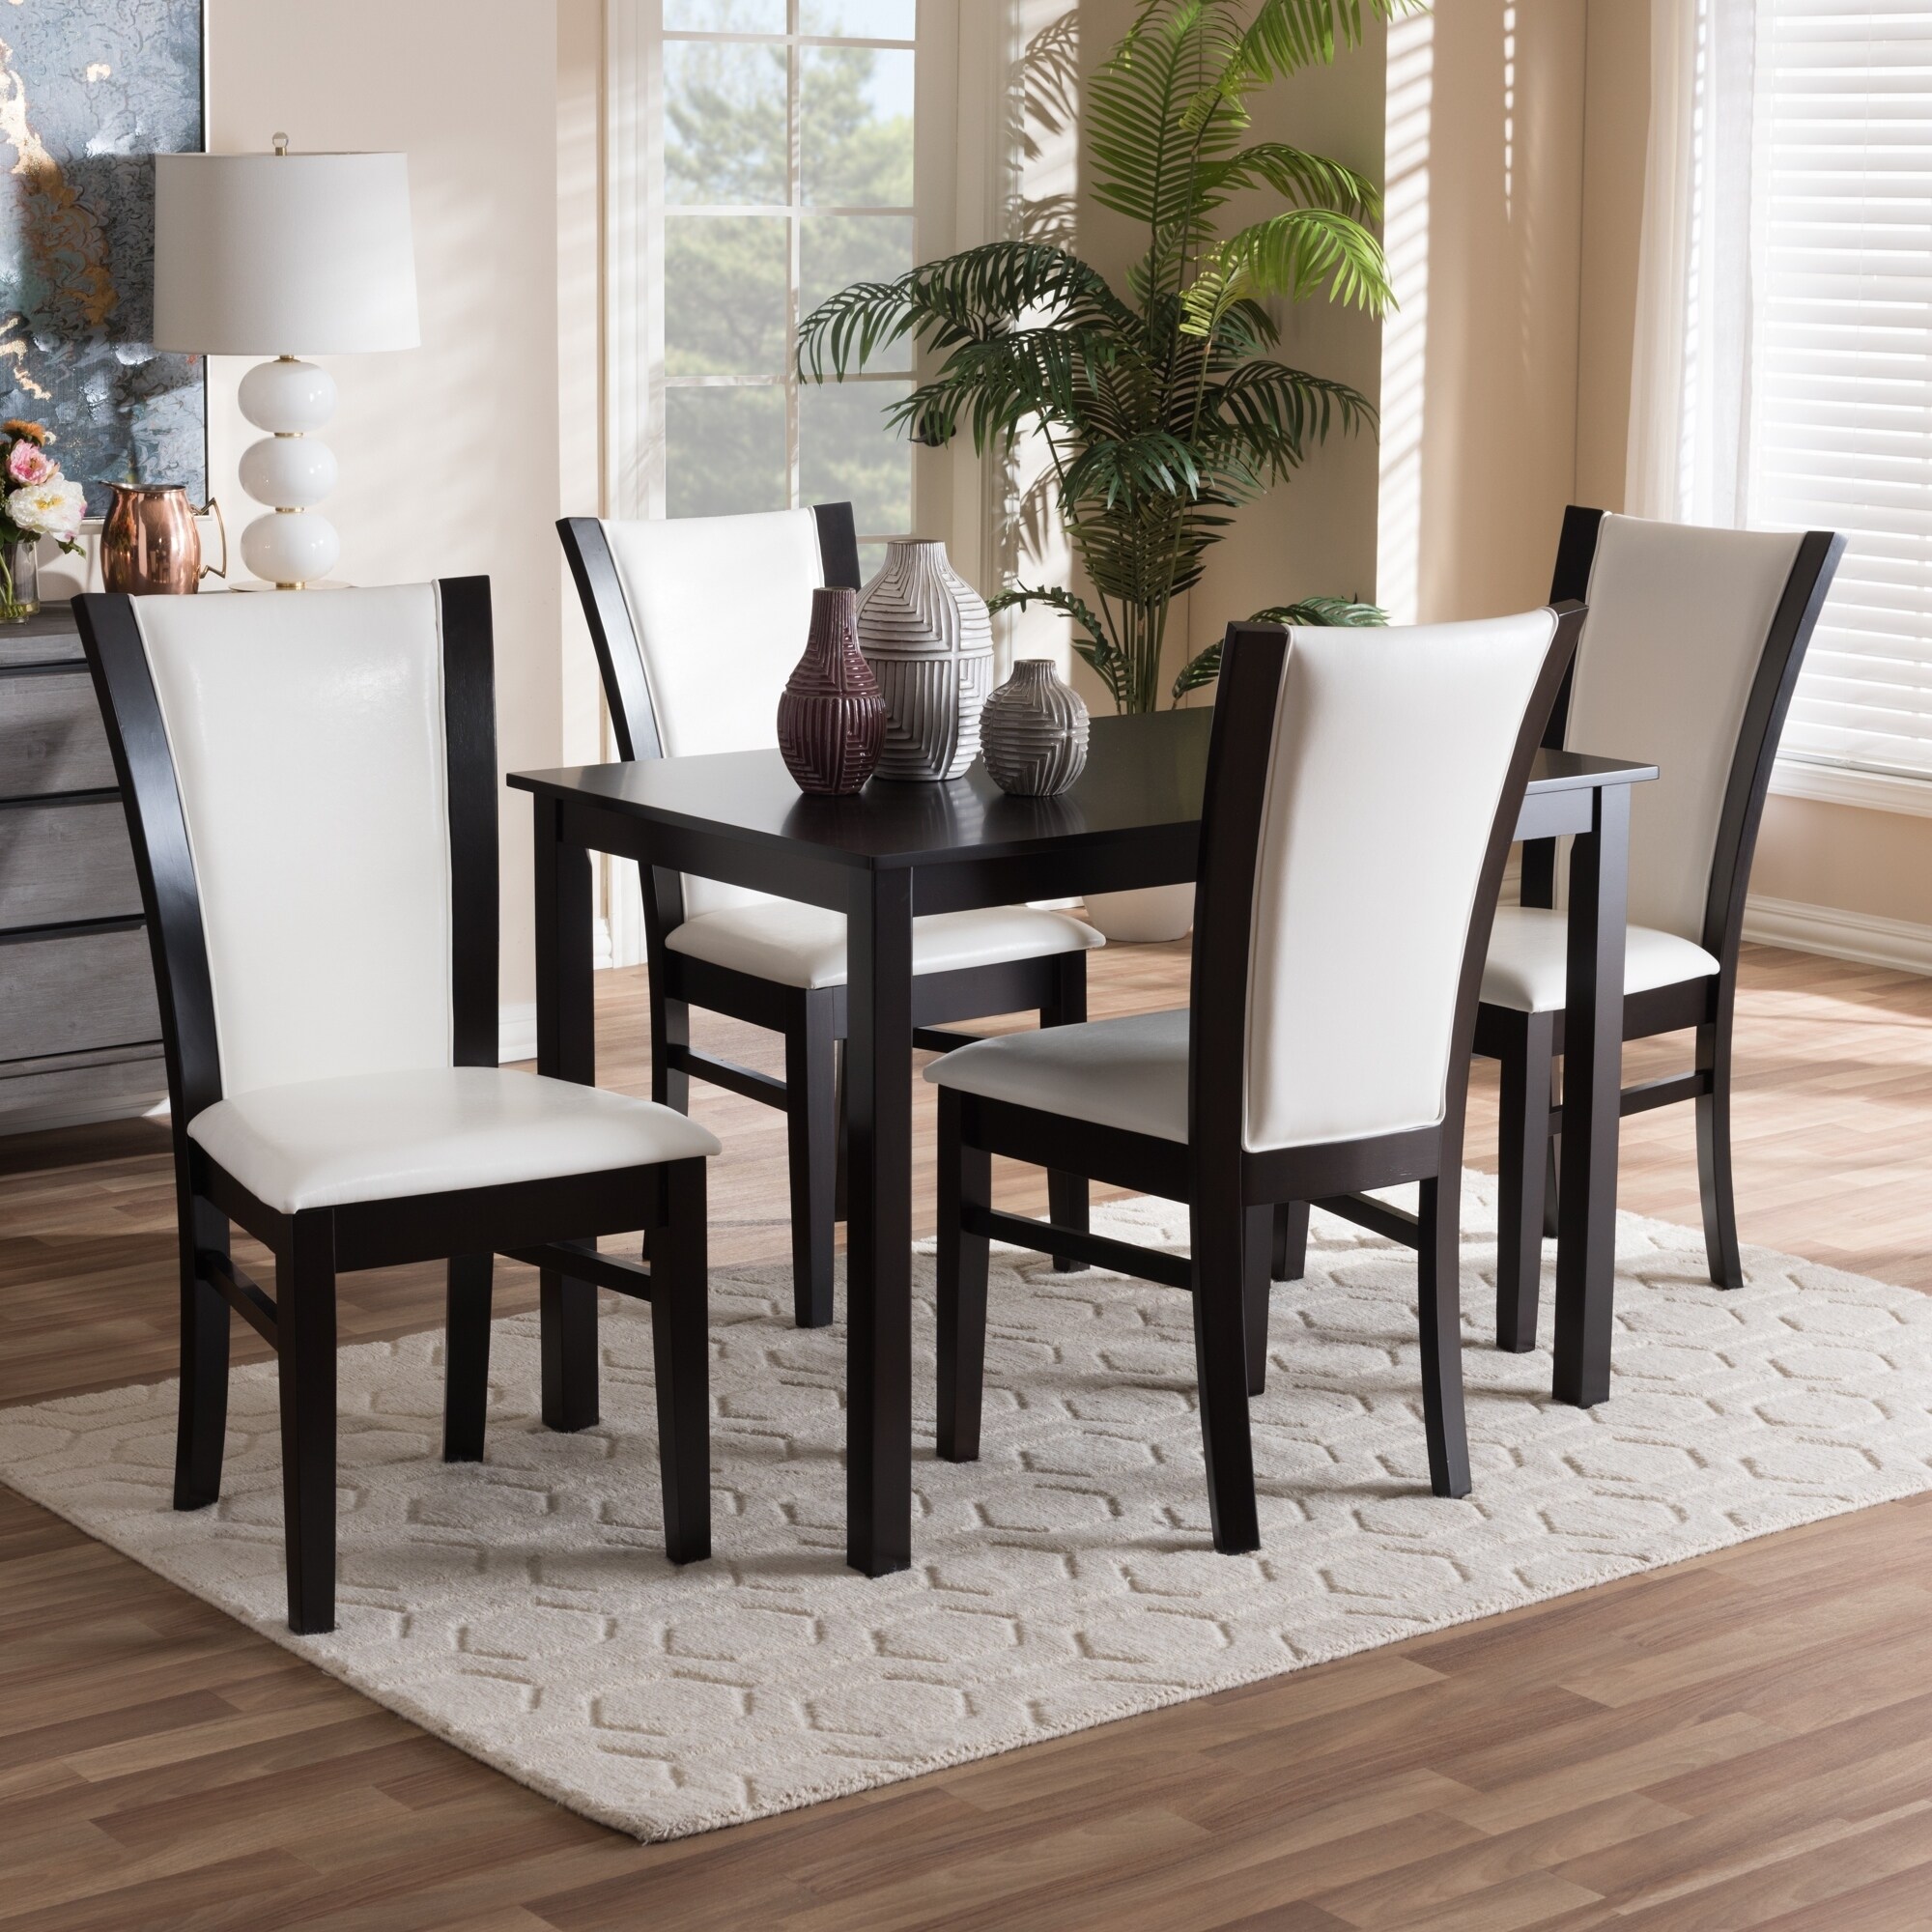 Contemporary 5 piece Dining Set Espresso. Modern Faux Leather Dining Chairs Set by shopc. Производитель обеденных столов